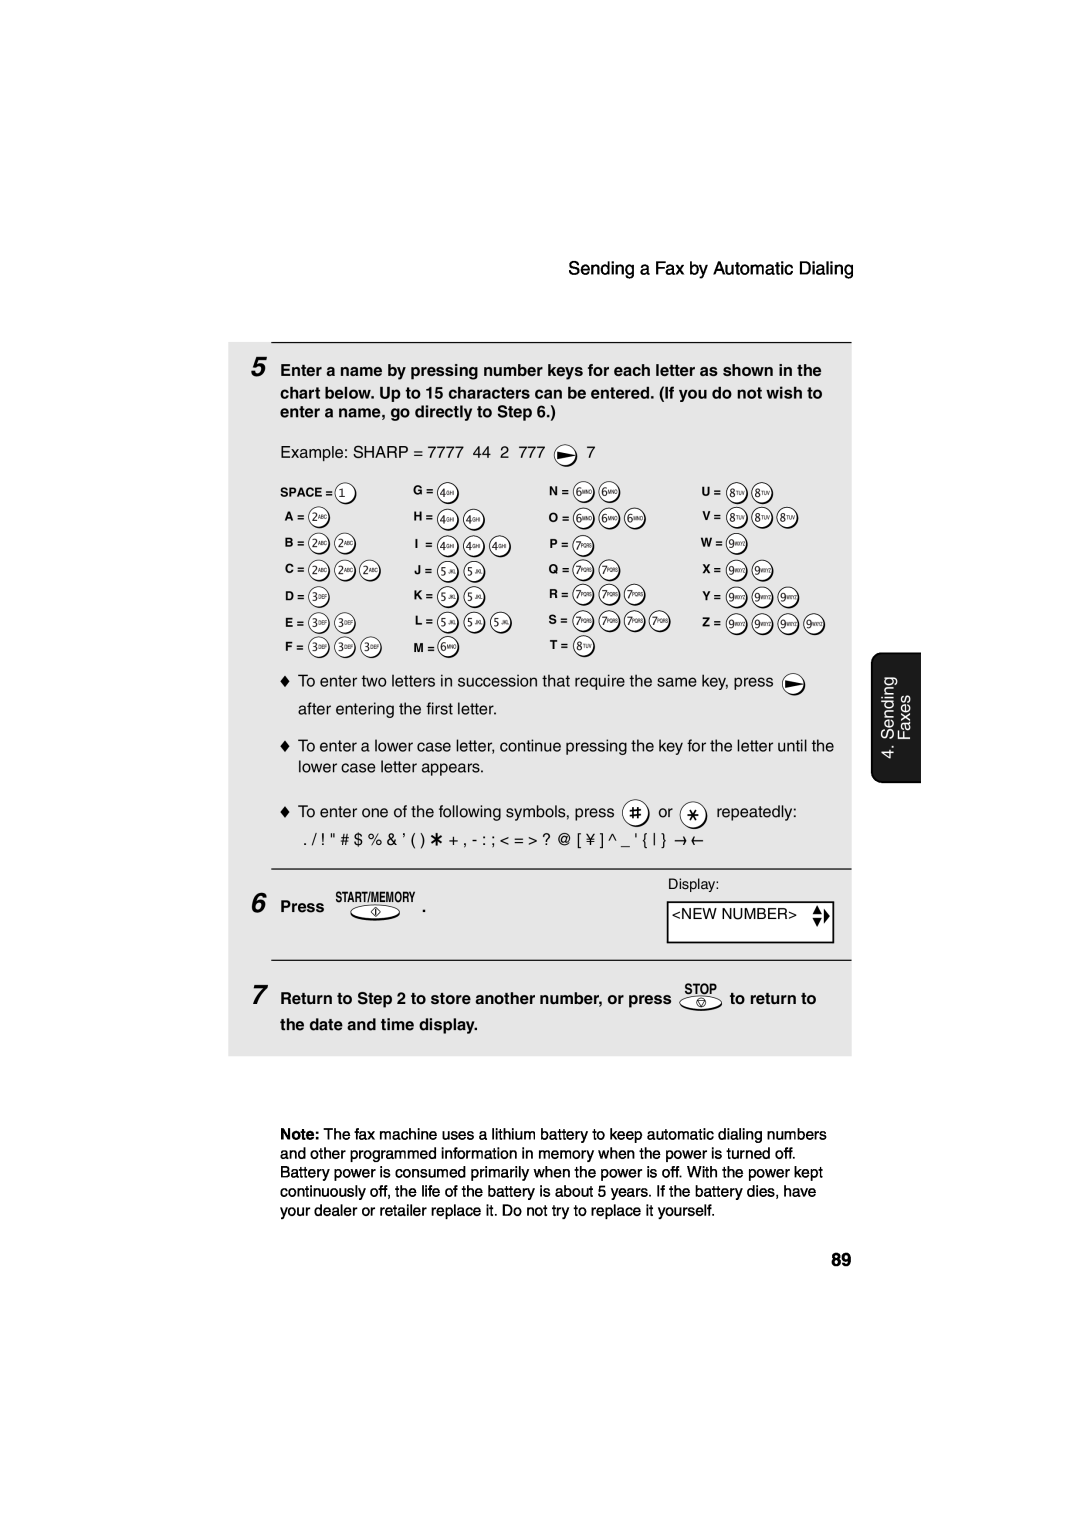 Sharp UX-CD600 operation manual Sending, Faxes, Display, Press START/MEMORY, New Number 